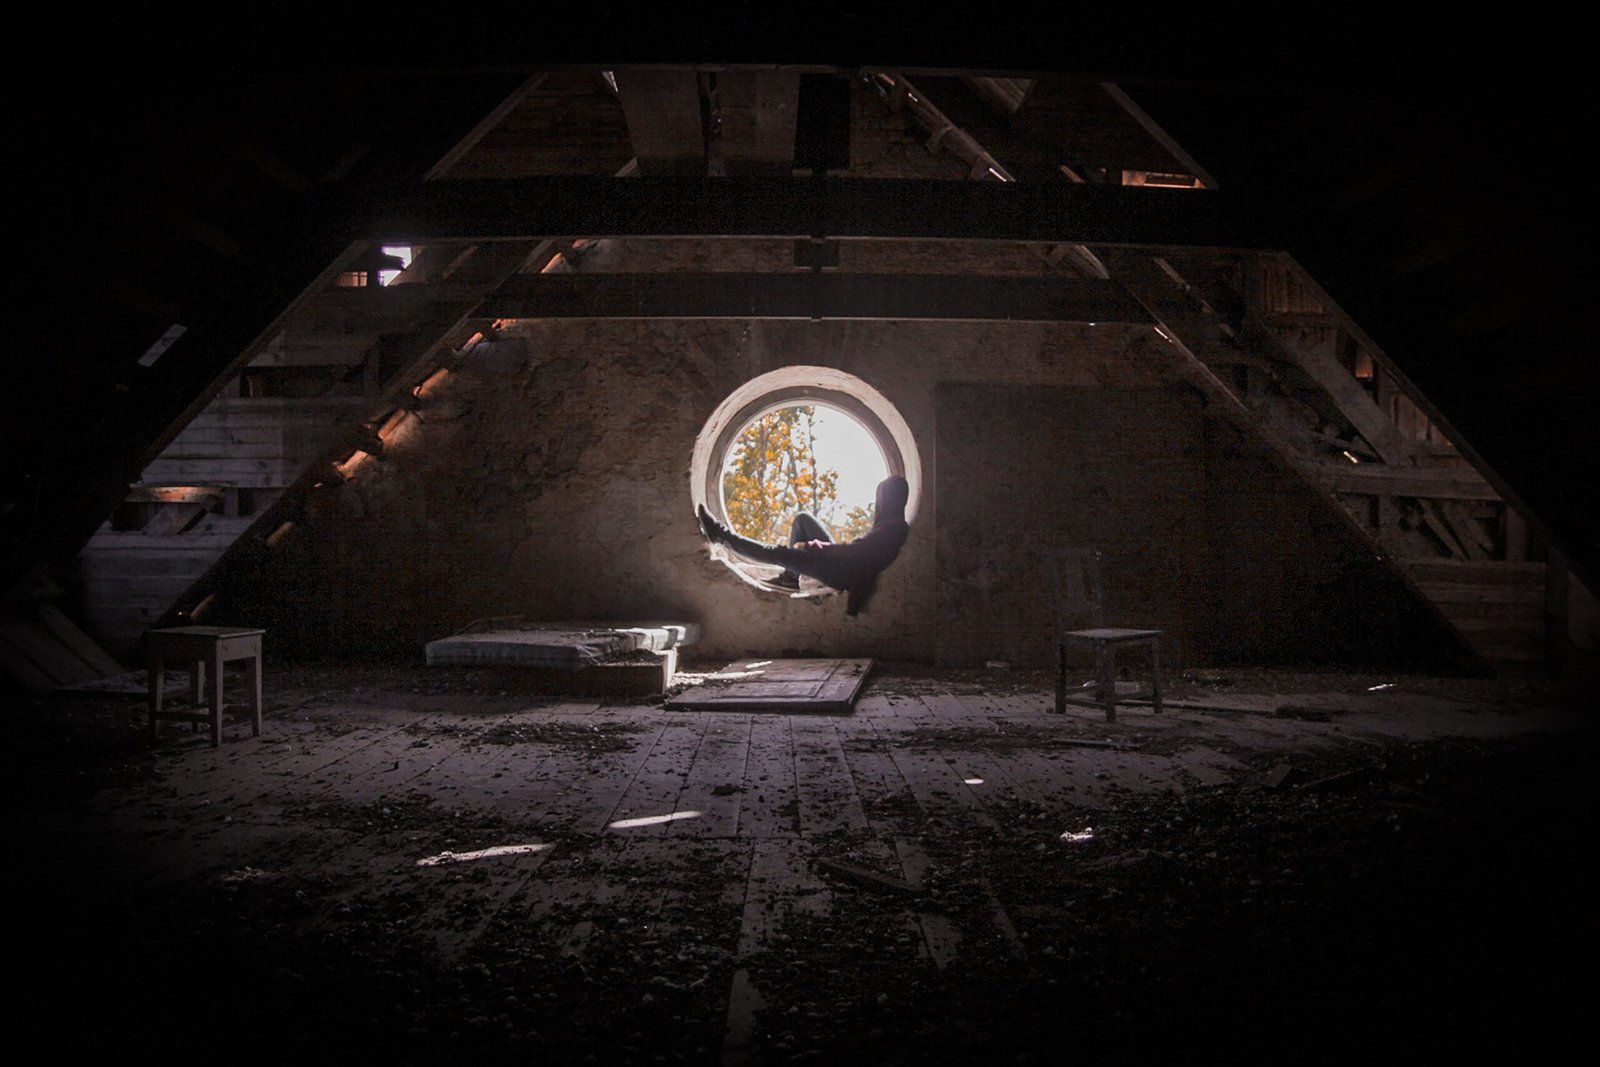 Photograph of an attic